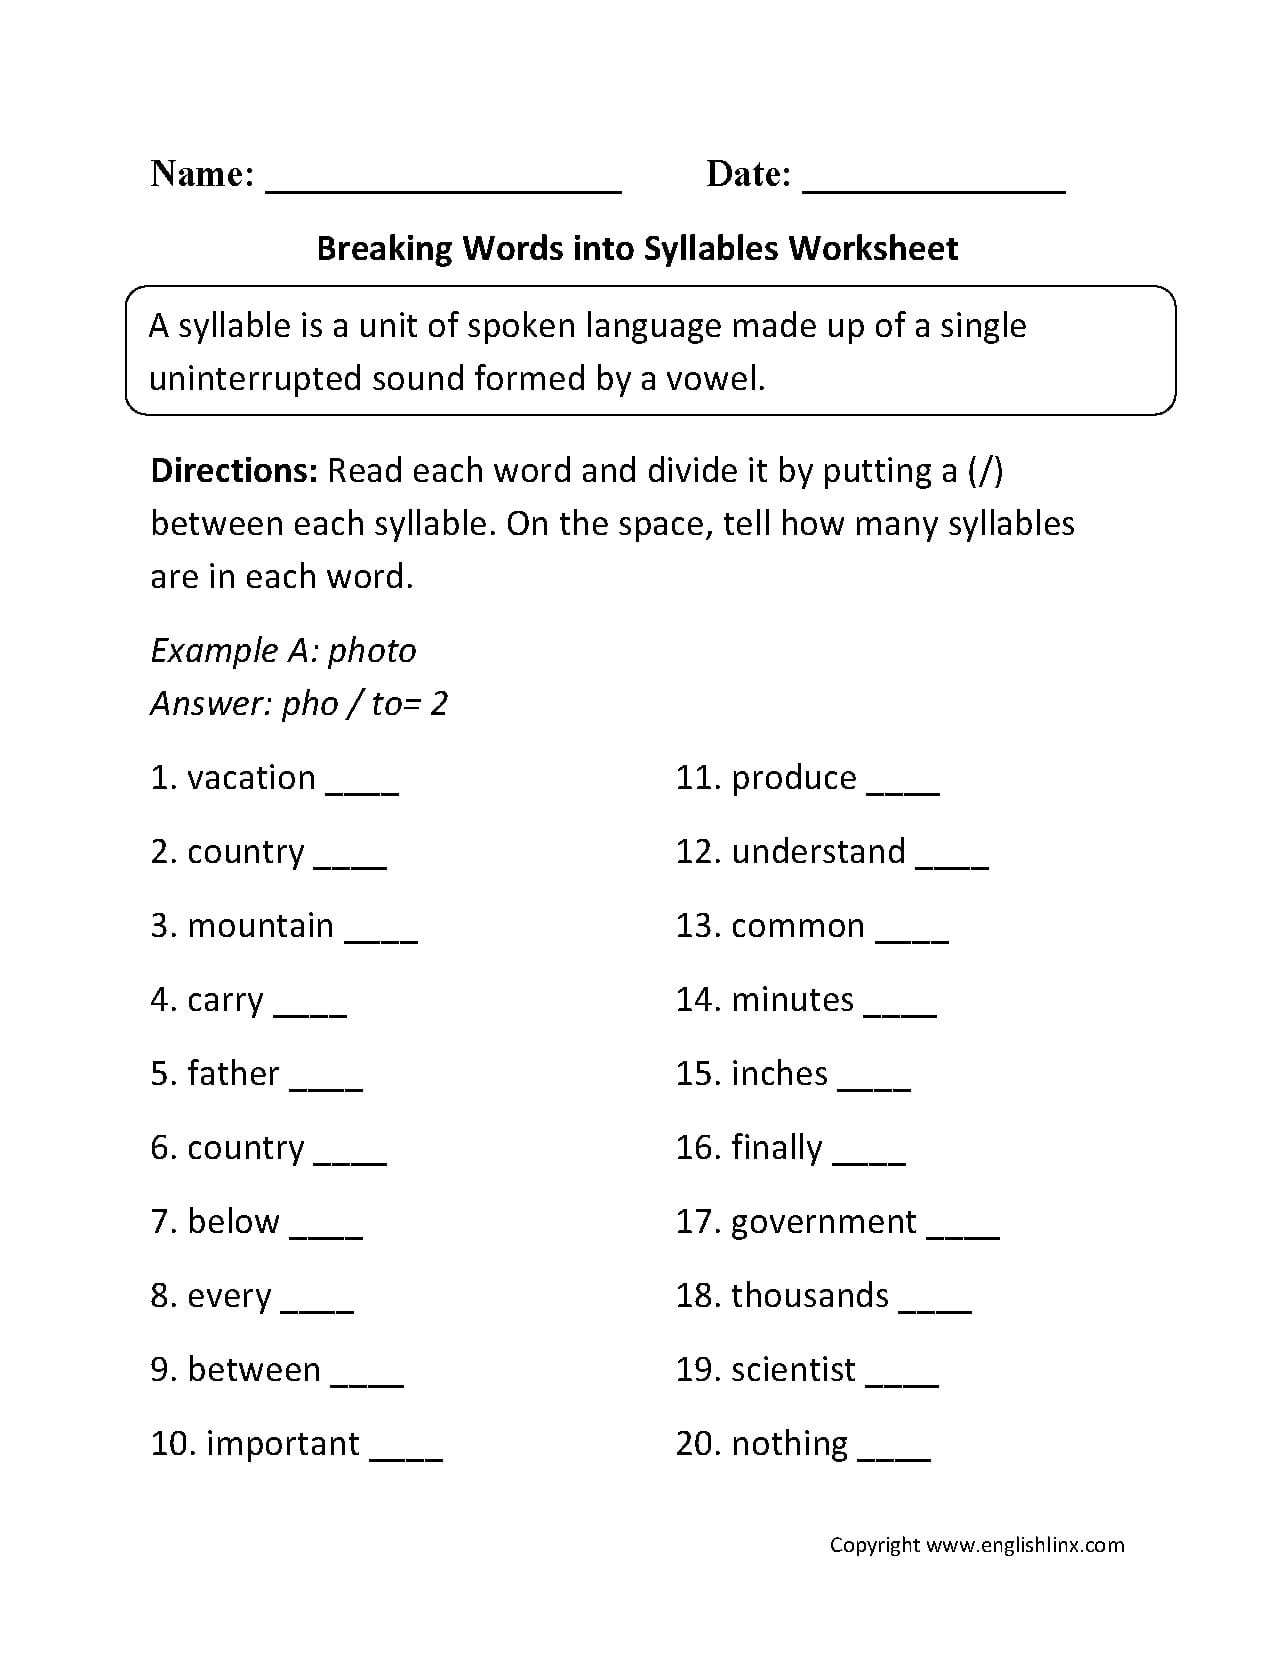 syllabication-worksheets-pdf-db-excel